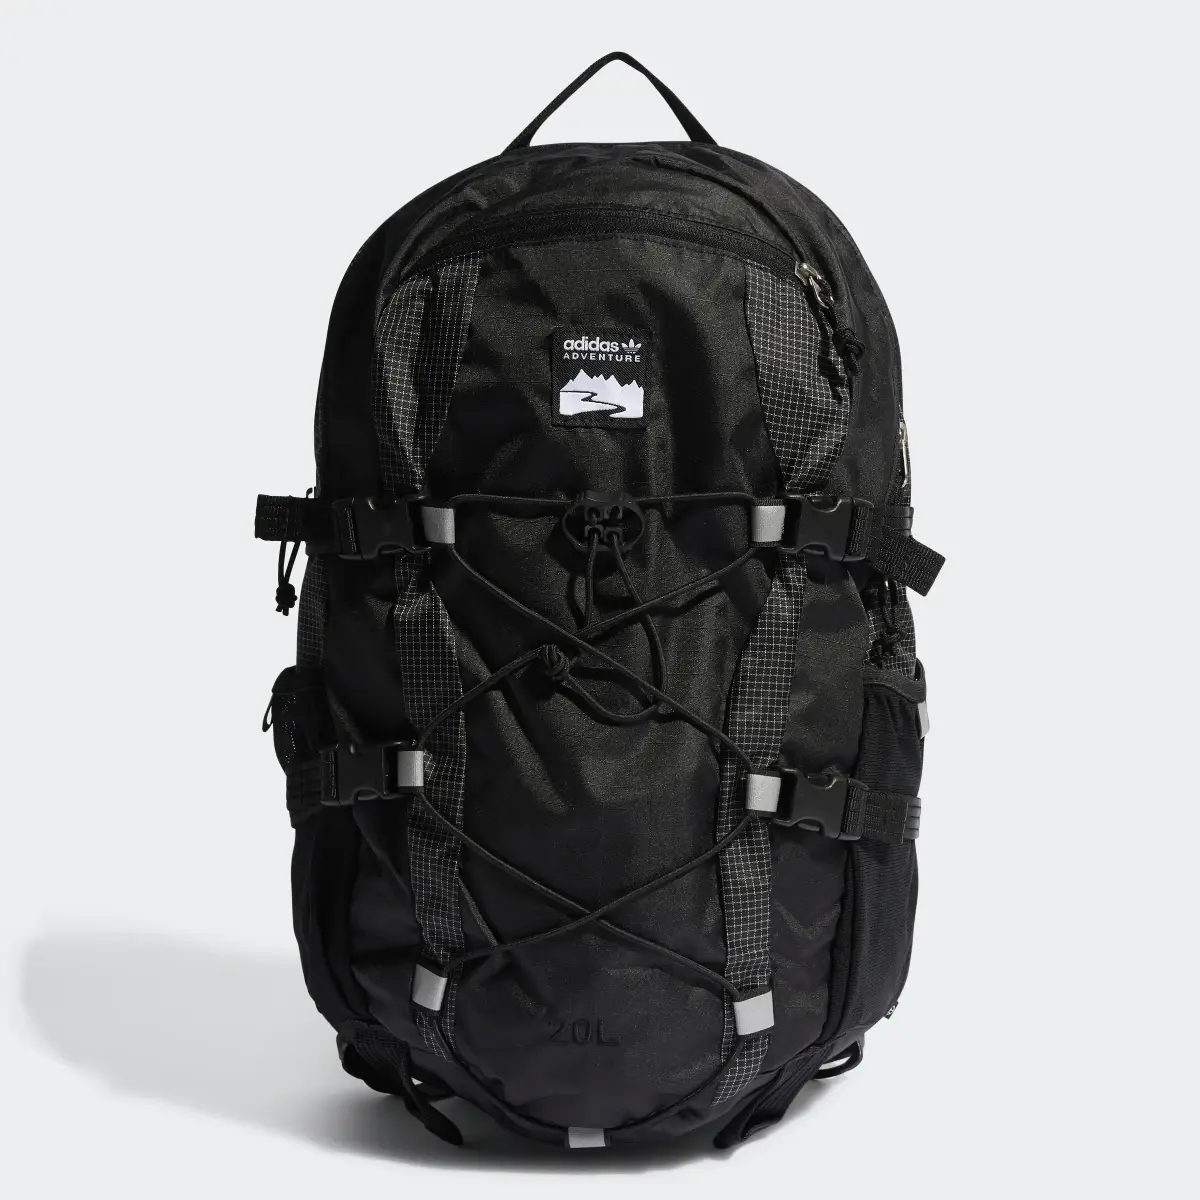 Adidas Adventure Backpack Large. 1